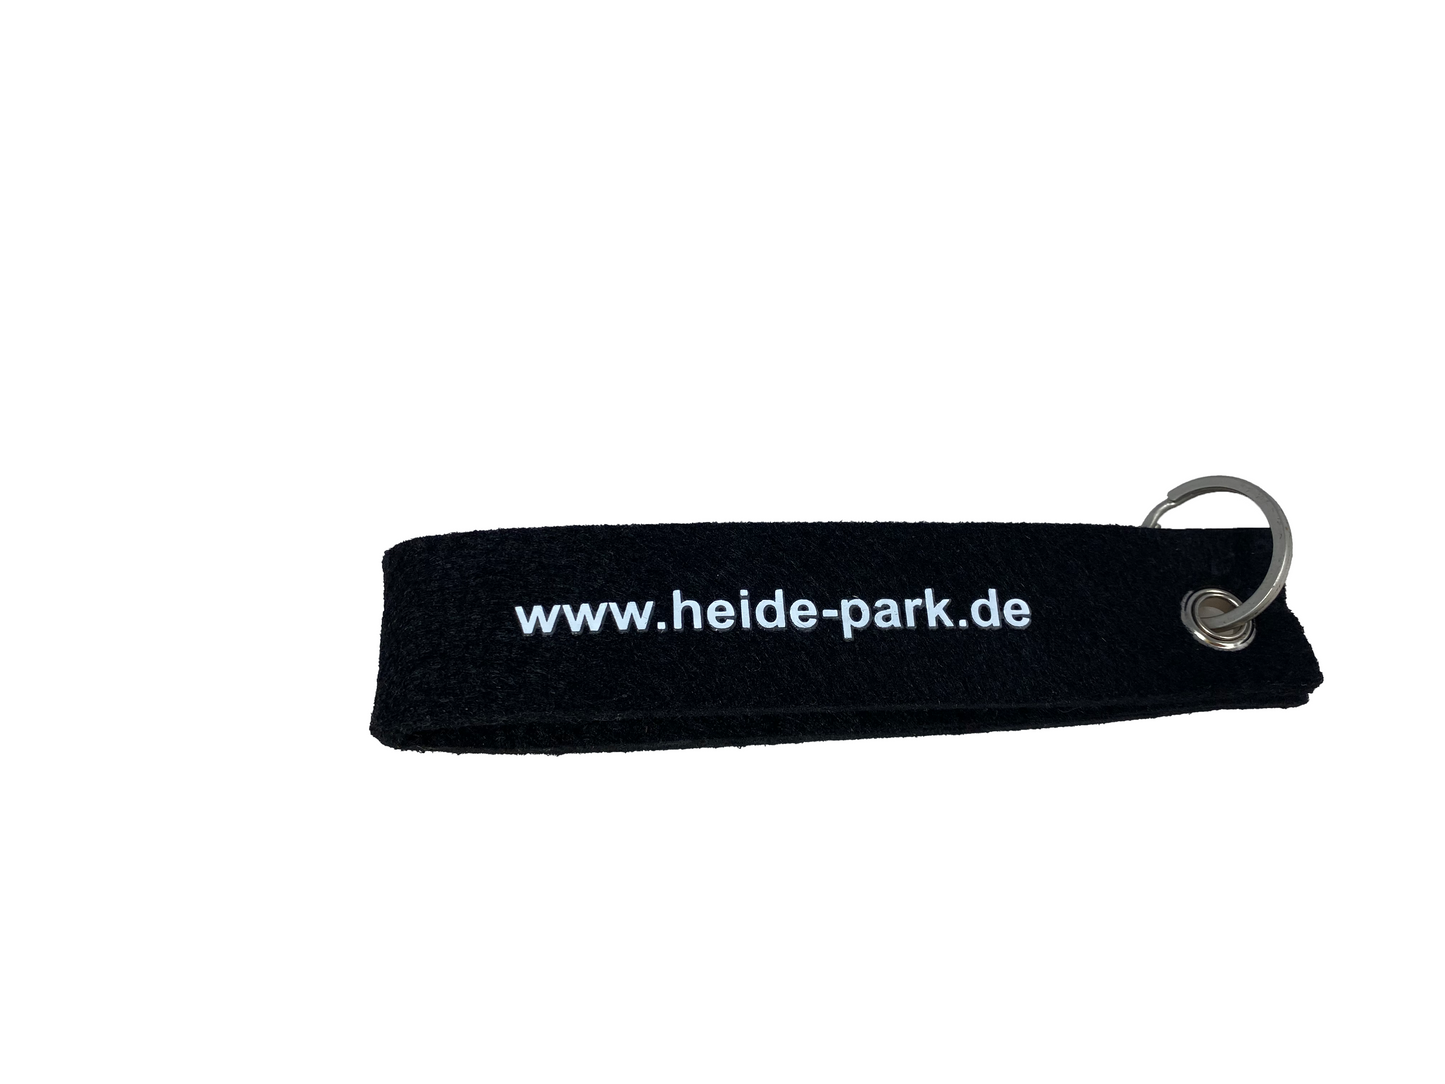 Heide Park Schlüsselanhänger (Nostalgic)